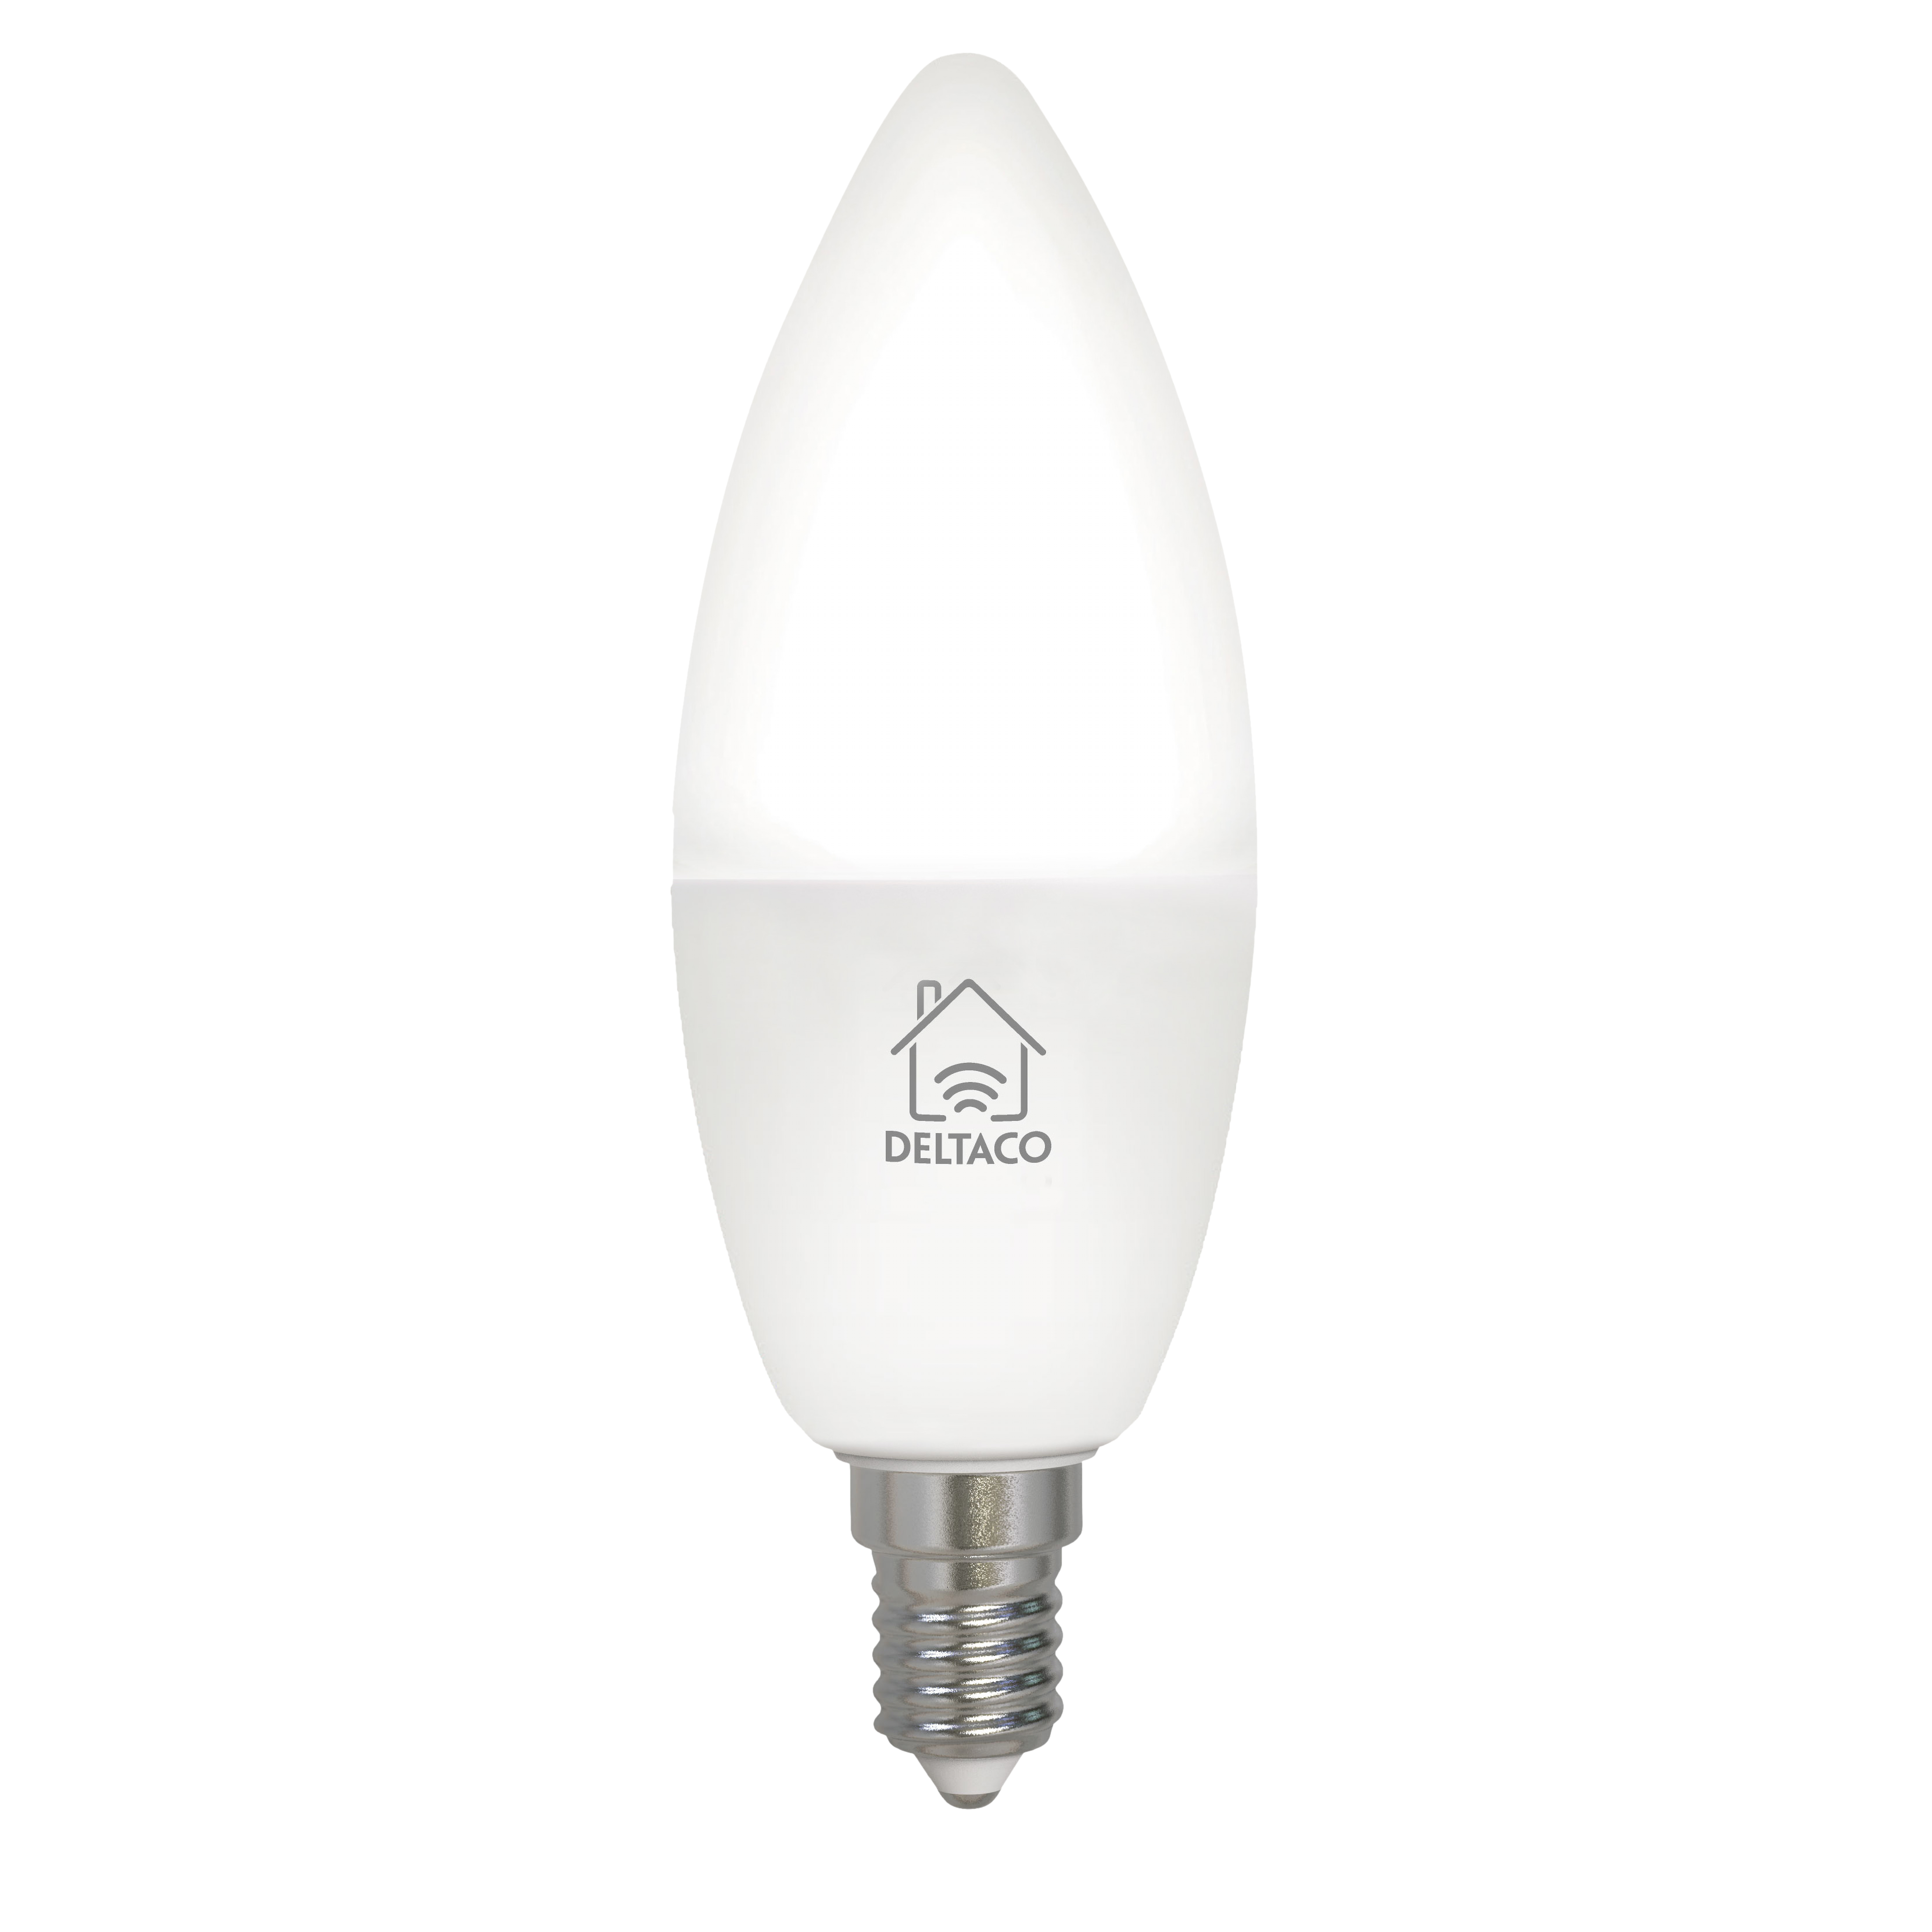 DELTACO Smart Bulb E14 LED Bulb 4.5W 470lm WiFi – Dimmable White LED Light